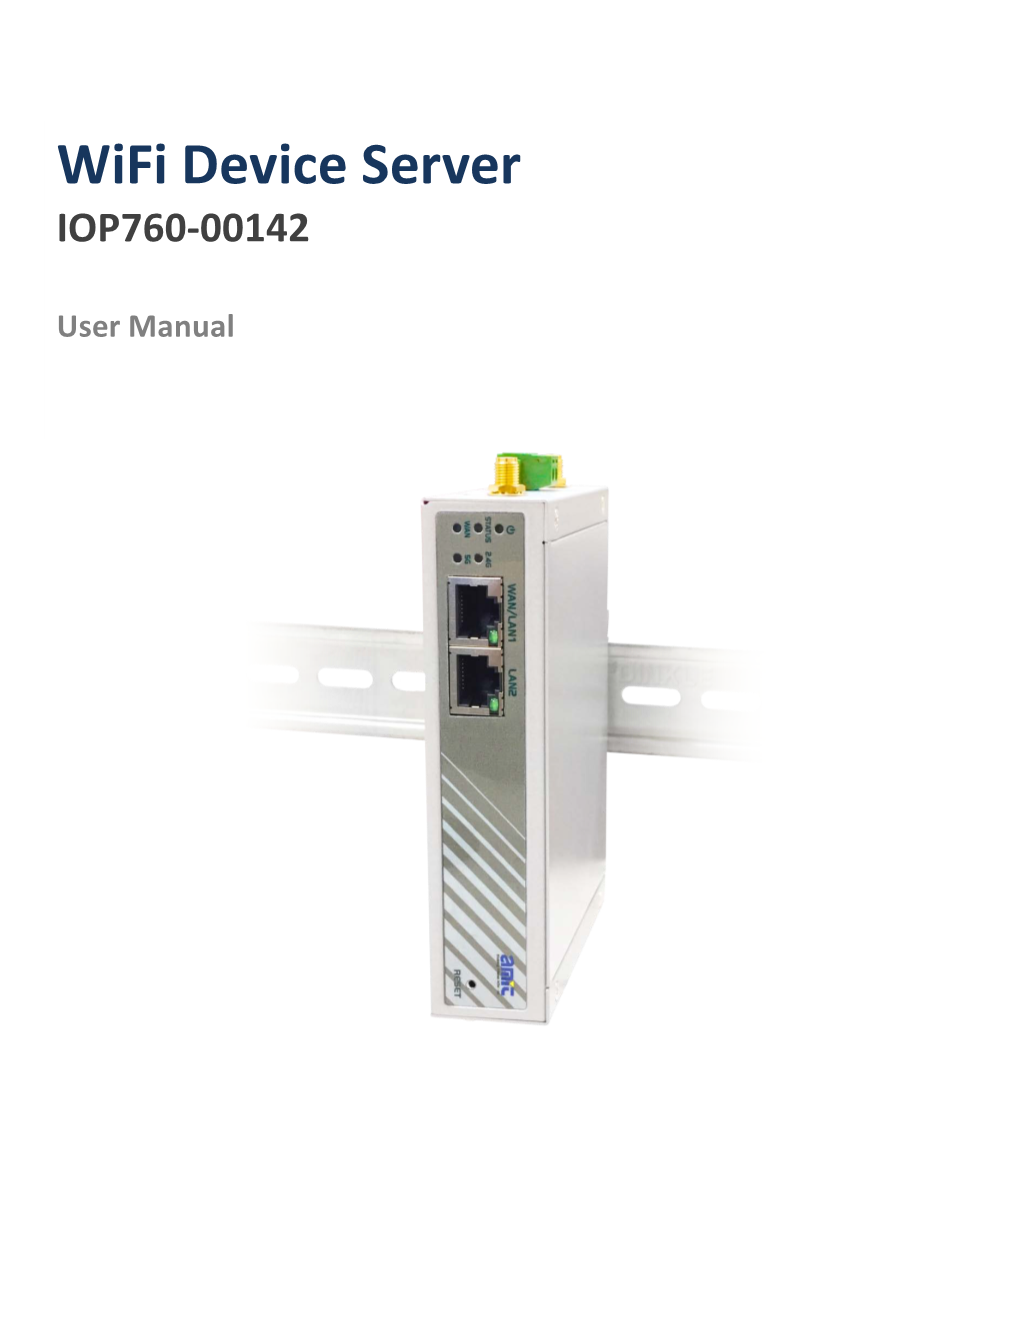 Wifi Device Server IOP760-00142